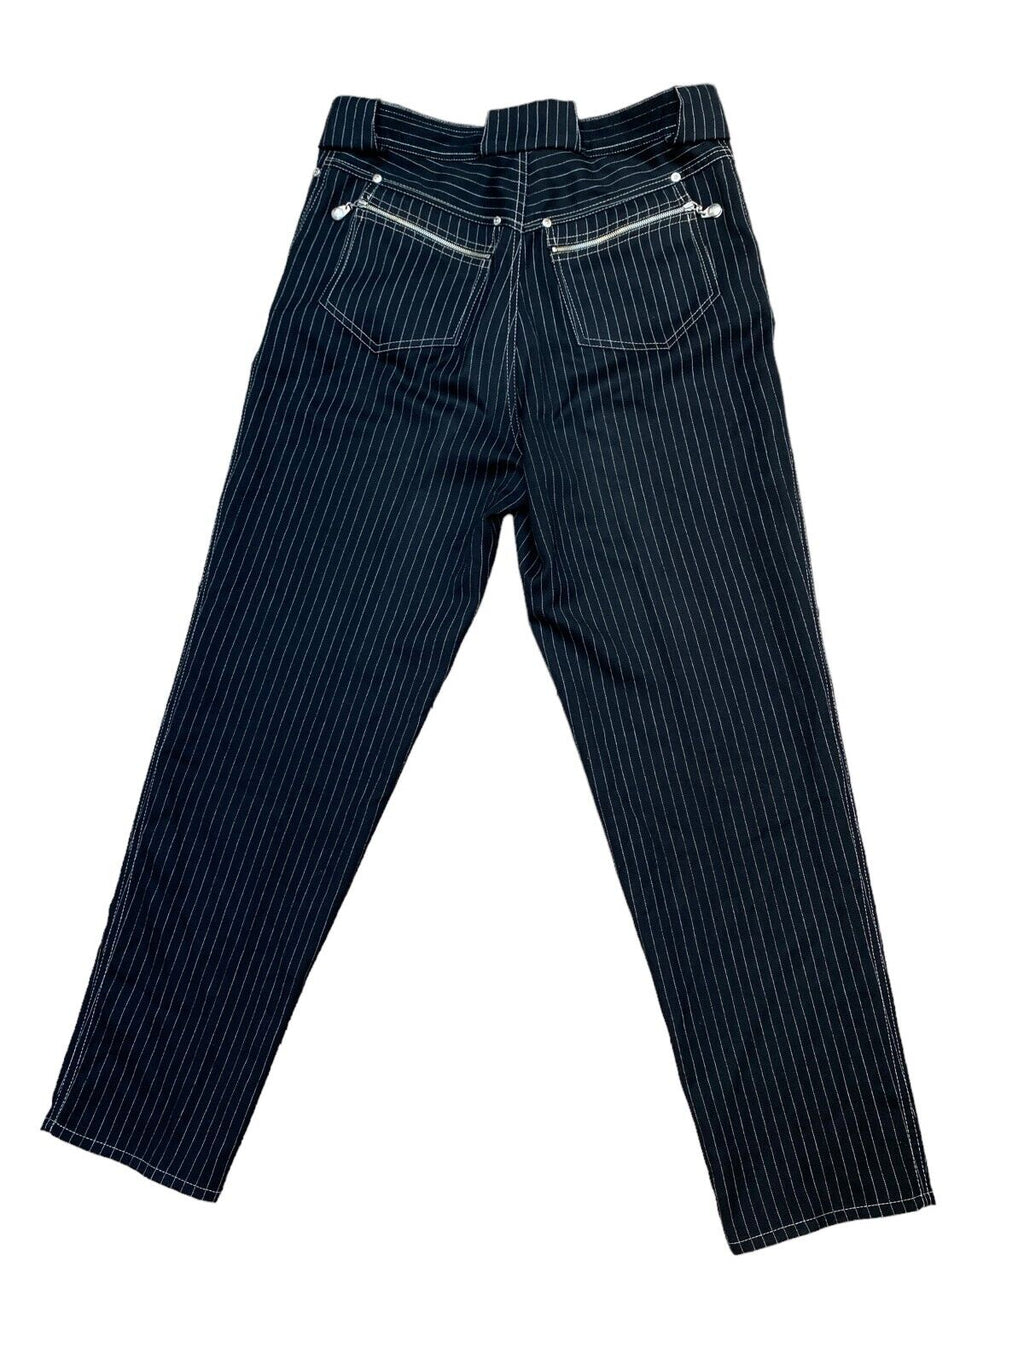 Black Striped Punk Wool Pants  Size L Large / US 32